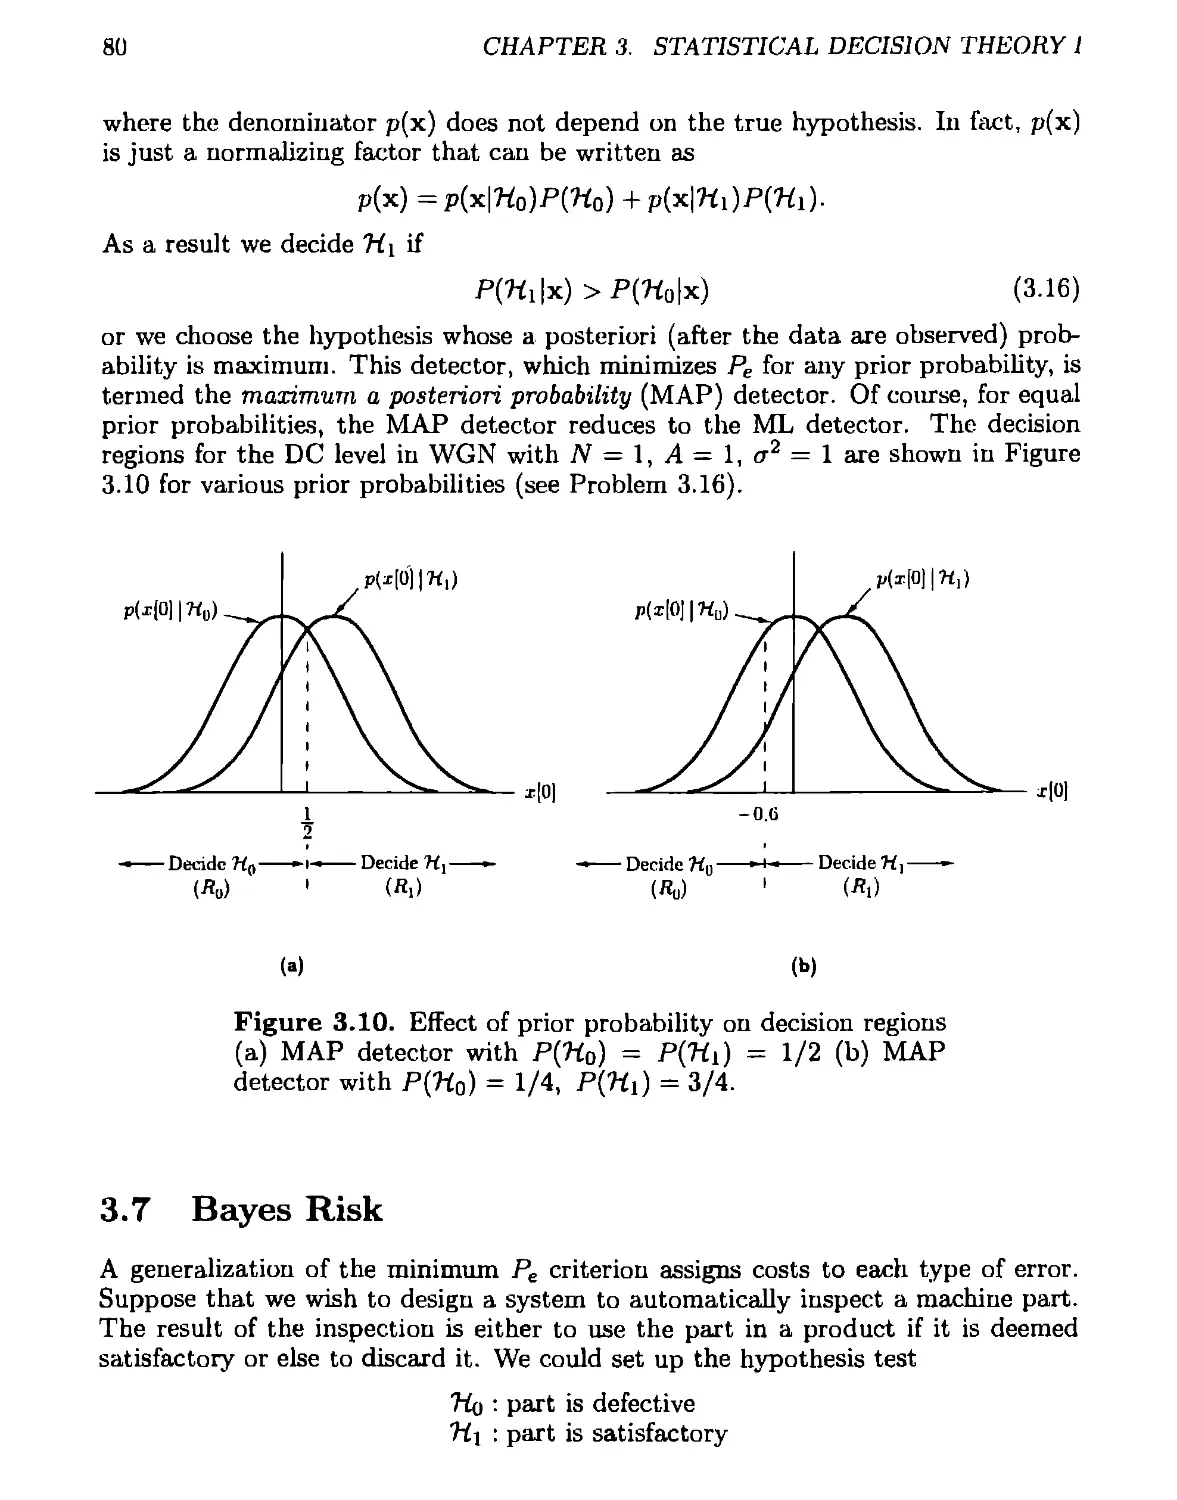 3.7 Bayes Risk